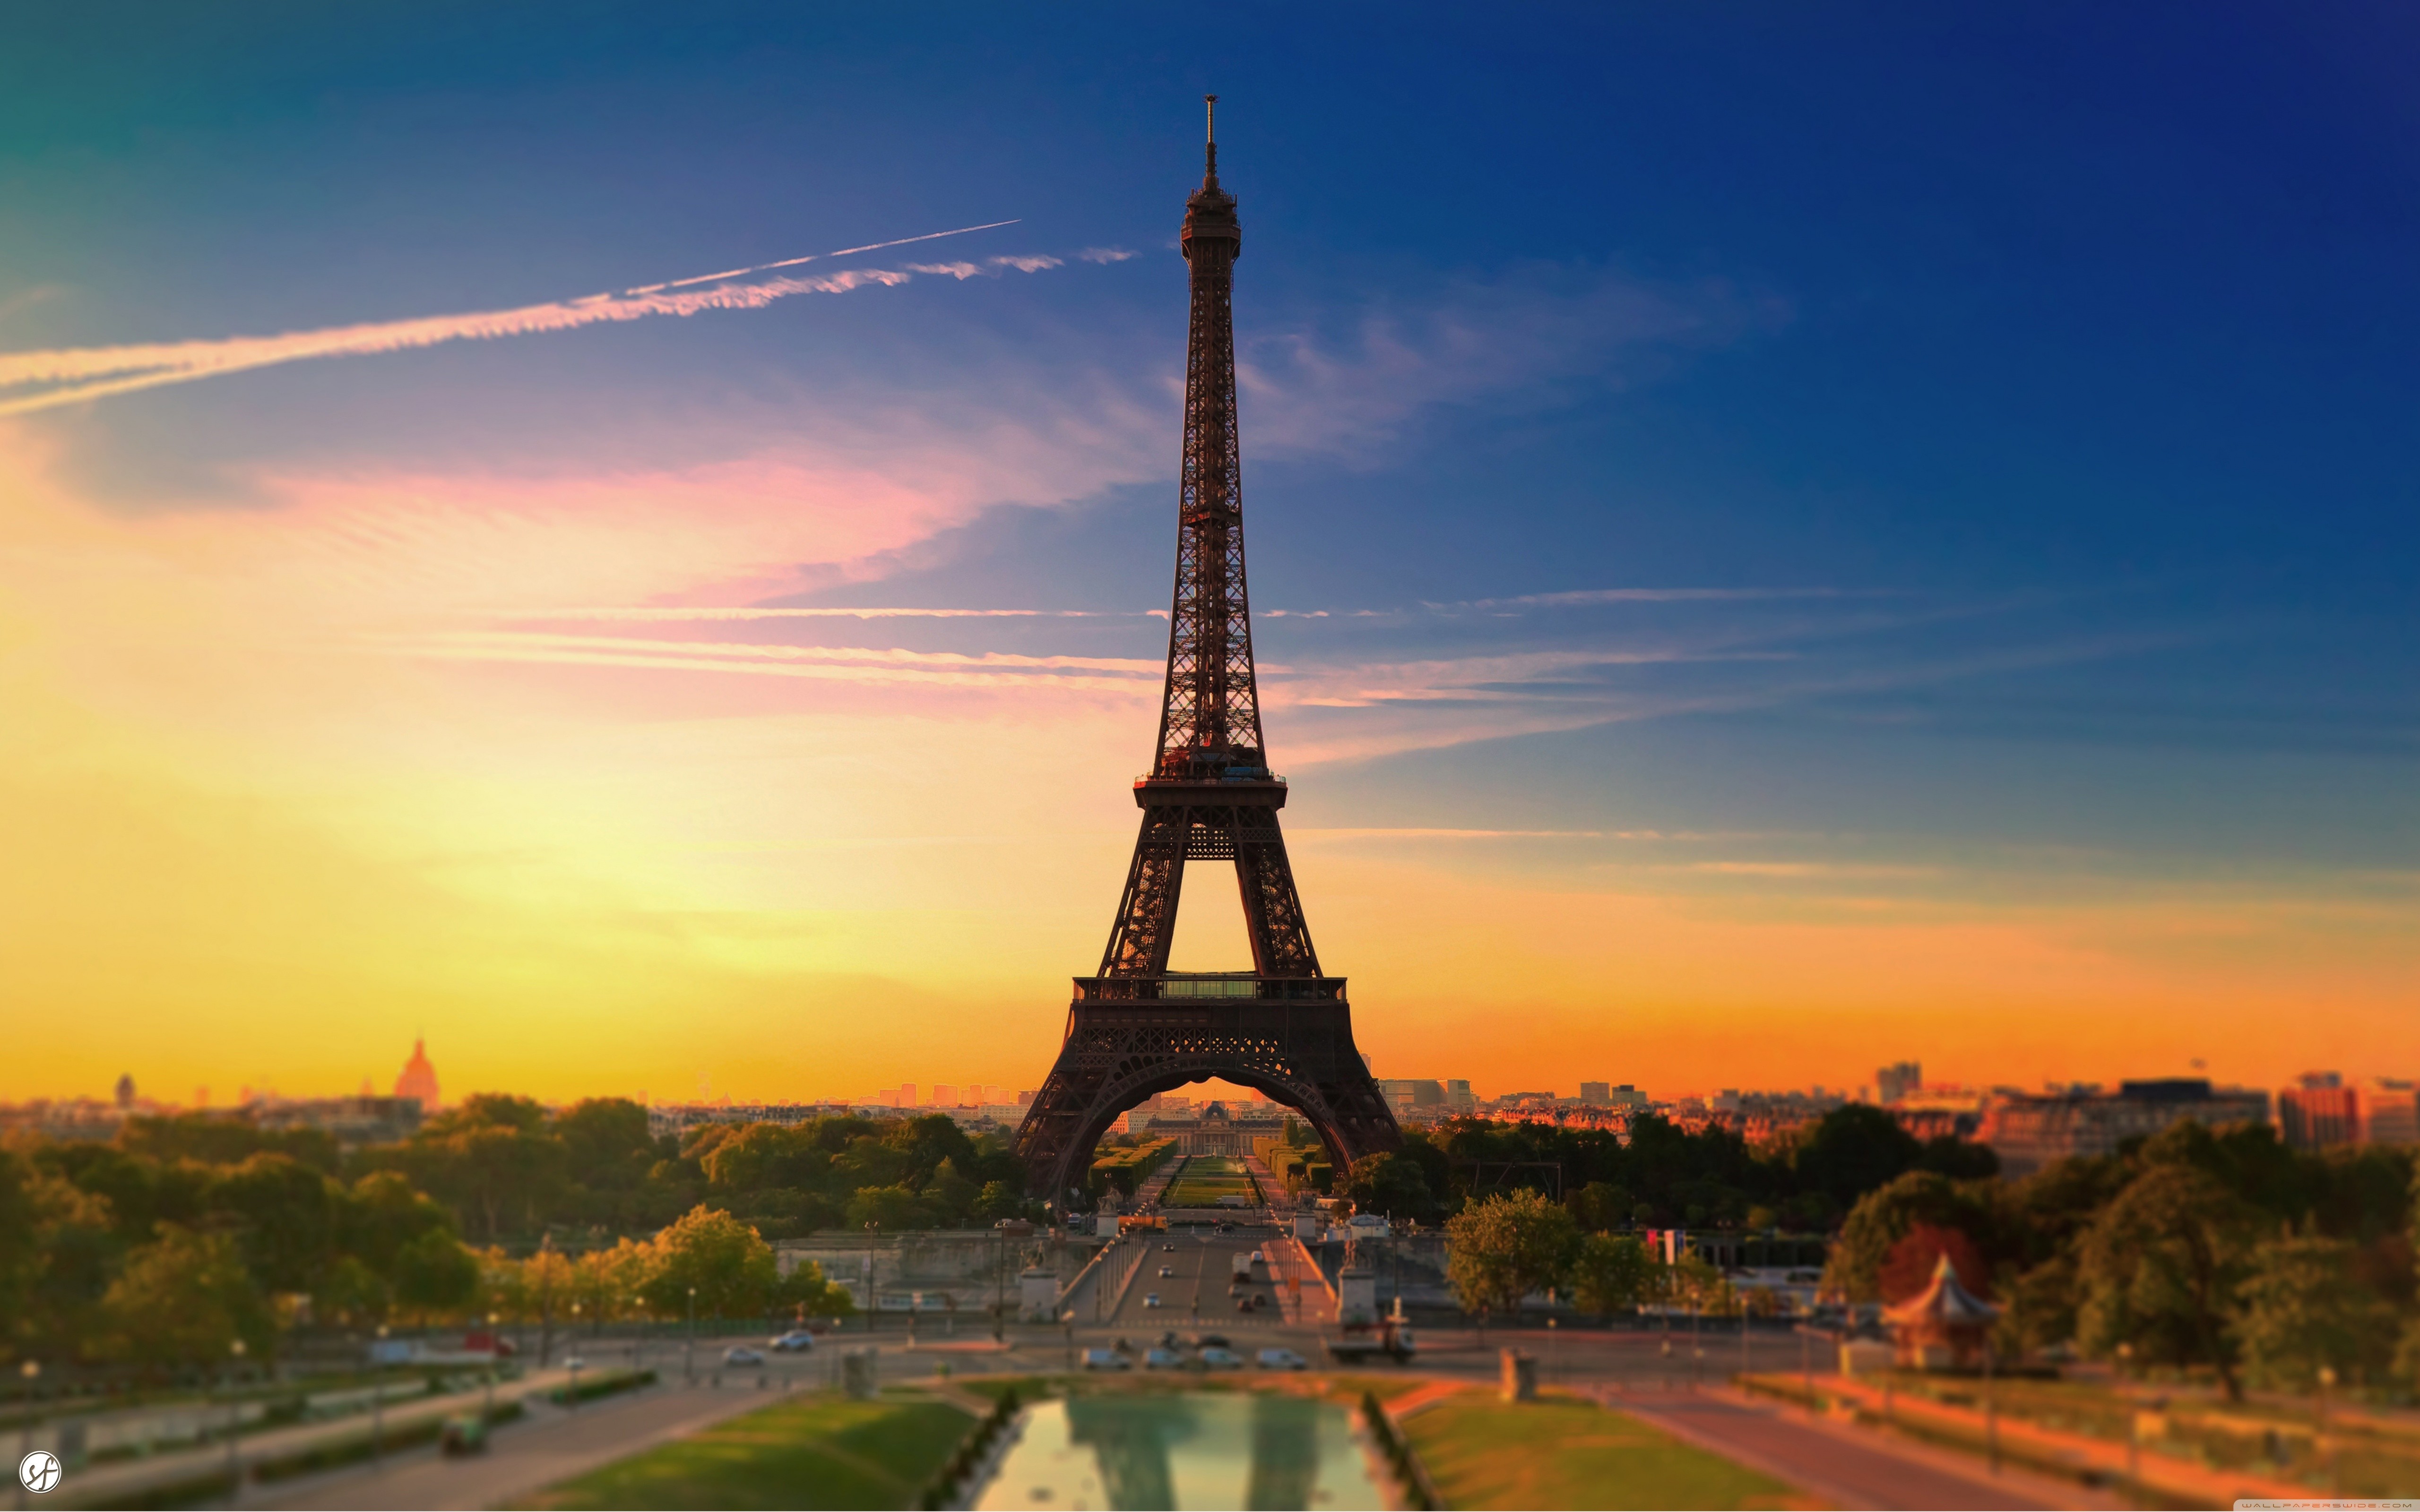 General 5120x3200 Eiffel Tower Paris France color correction sunset sky architecture tower clouds contrails landmark